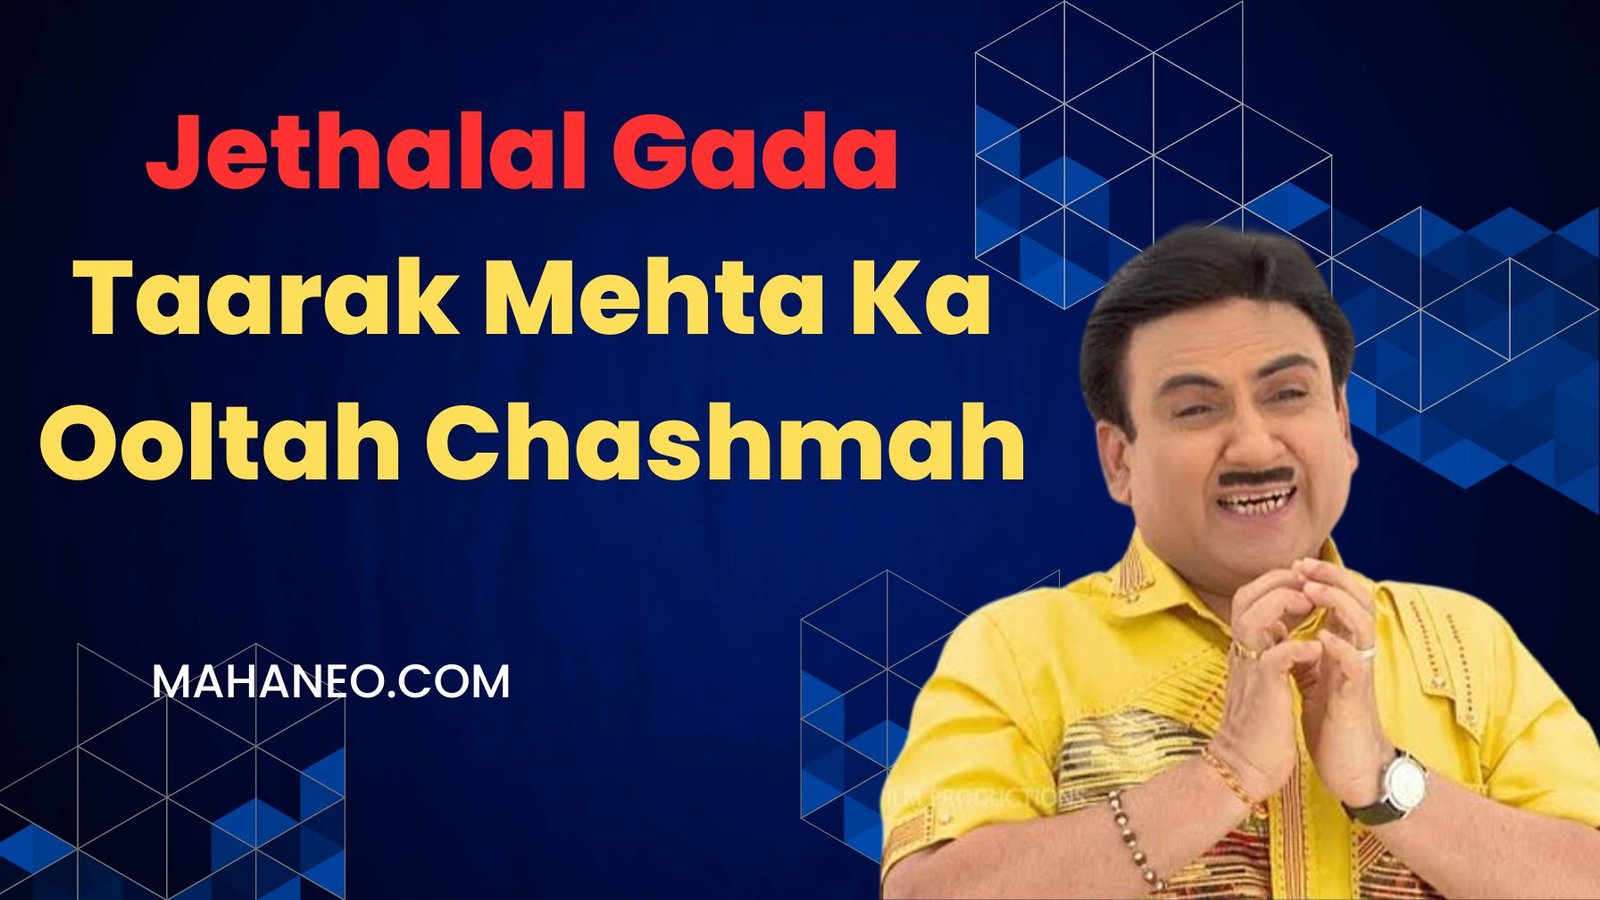 TV FAME - Jethalal Gada: Taarak Mehta Ka Ooltah Chashmah